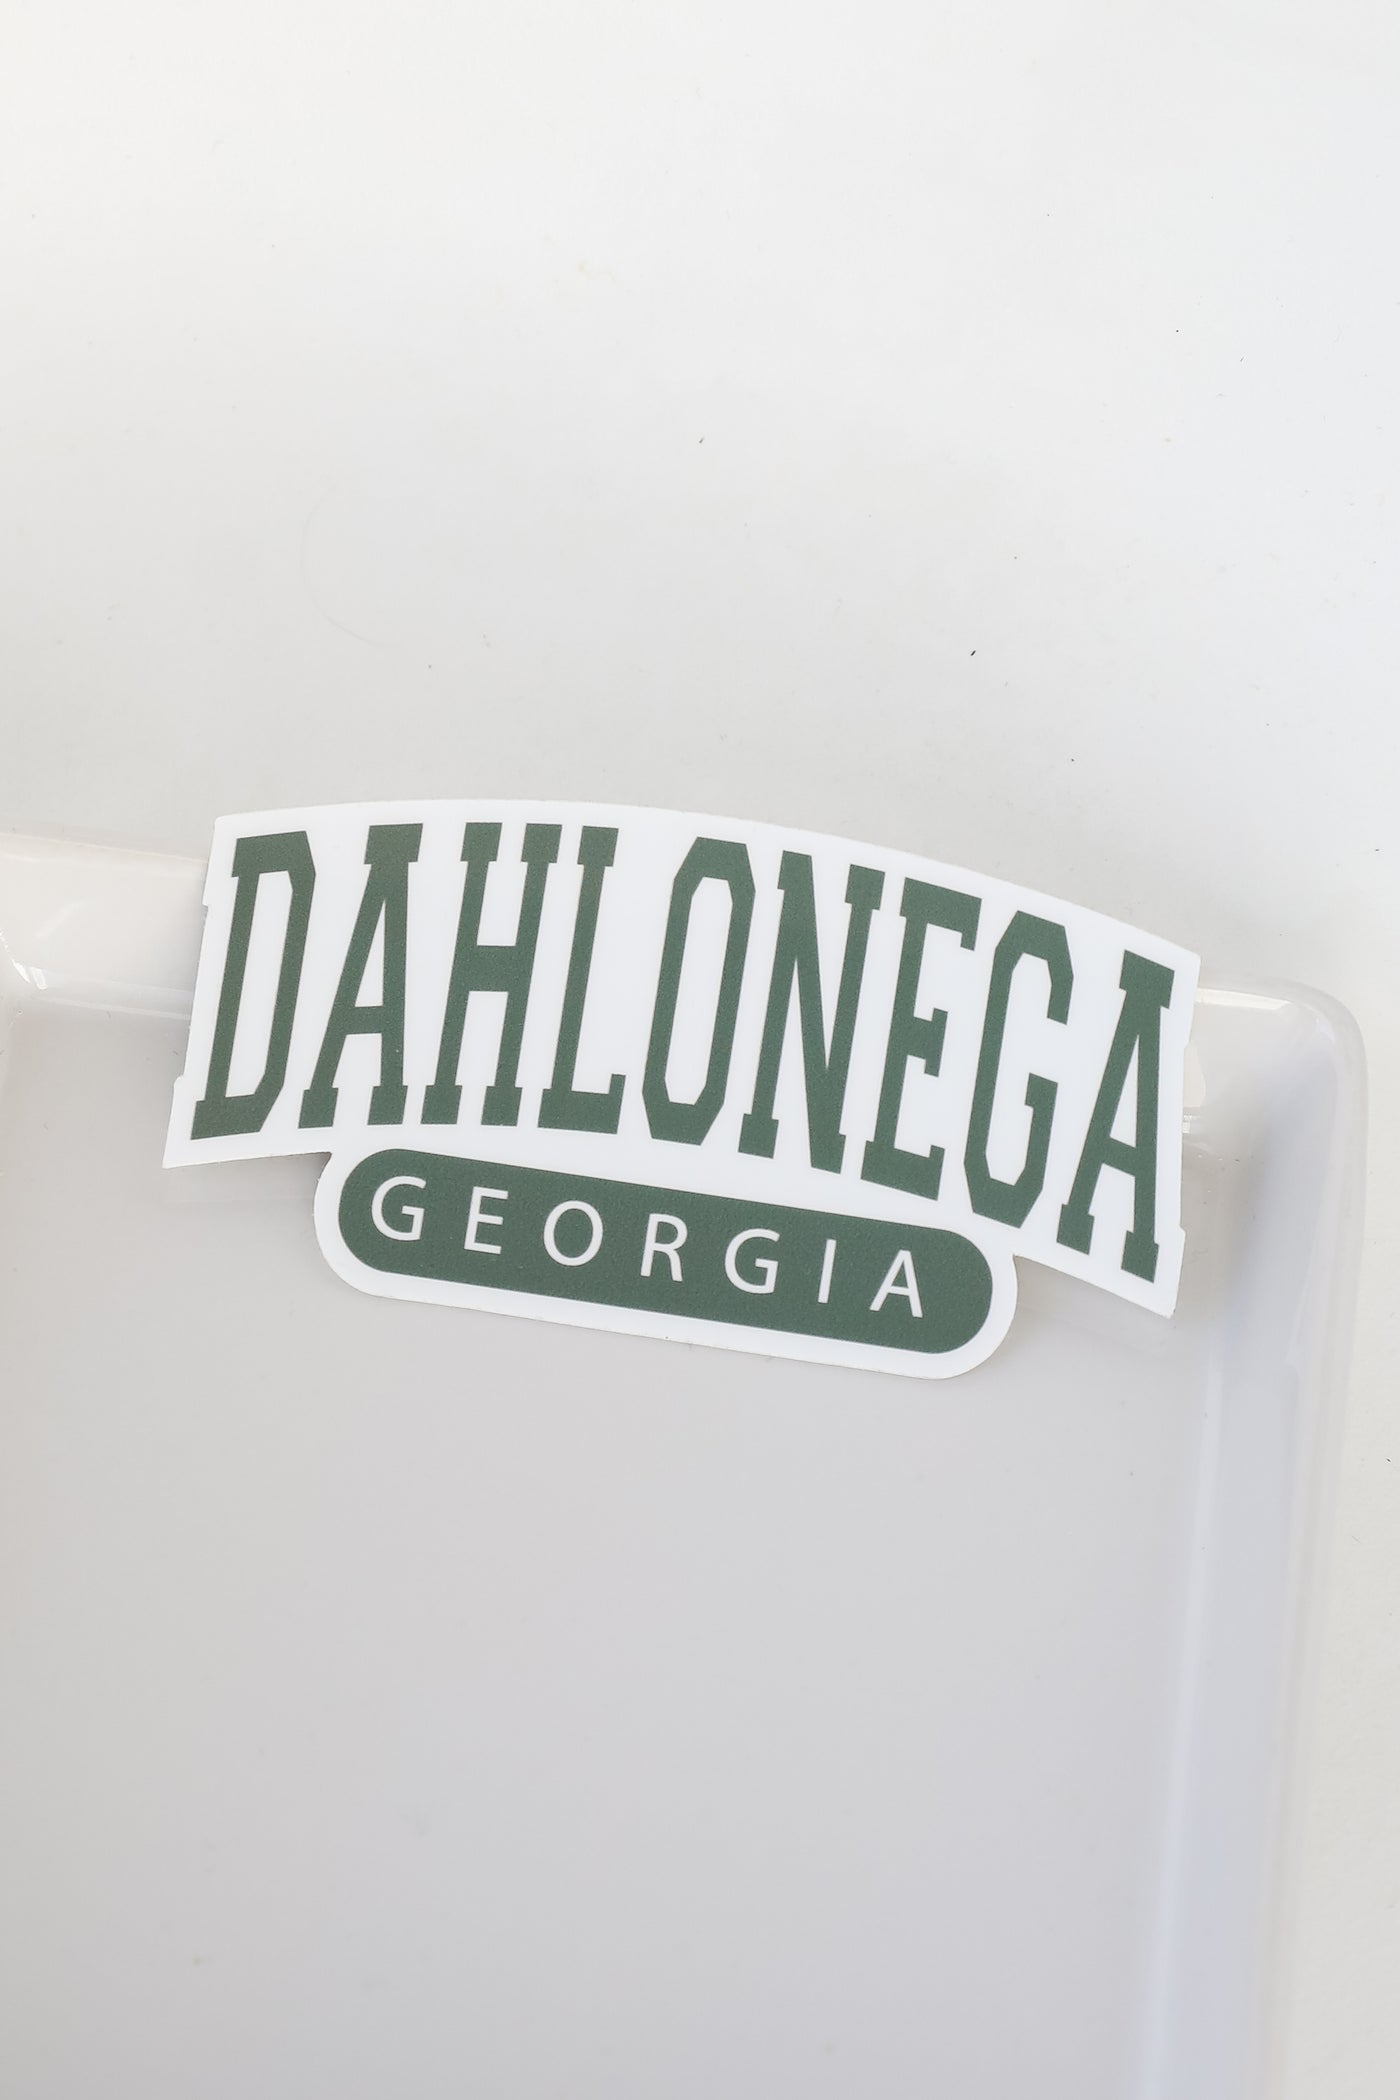 Dahlonega Georgia Sticker in olive